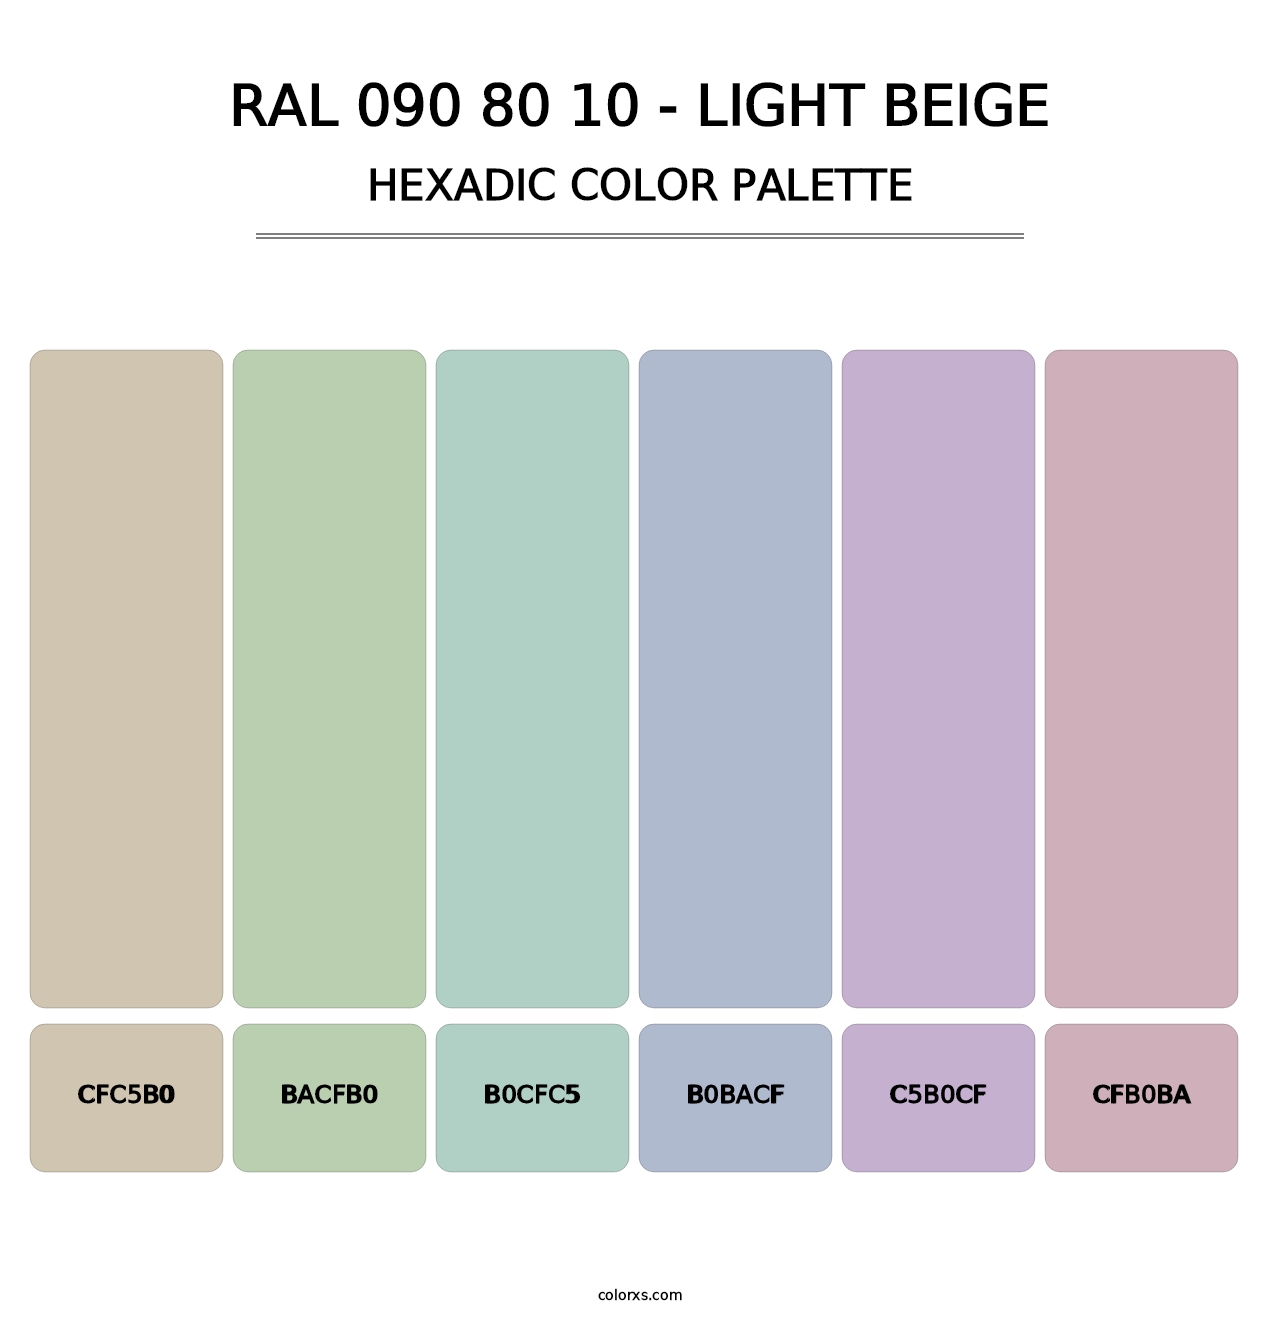 RAL 090 80 10 - Light Beige - Hexadic Color Palette